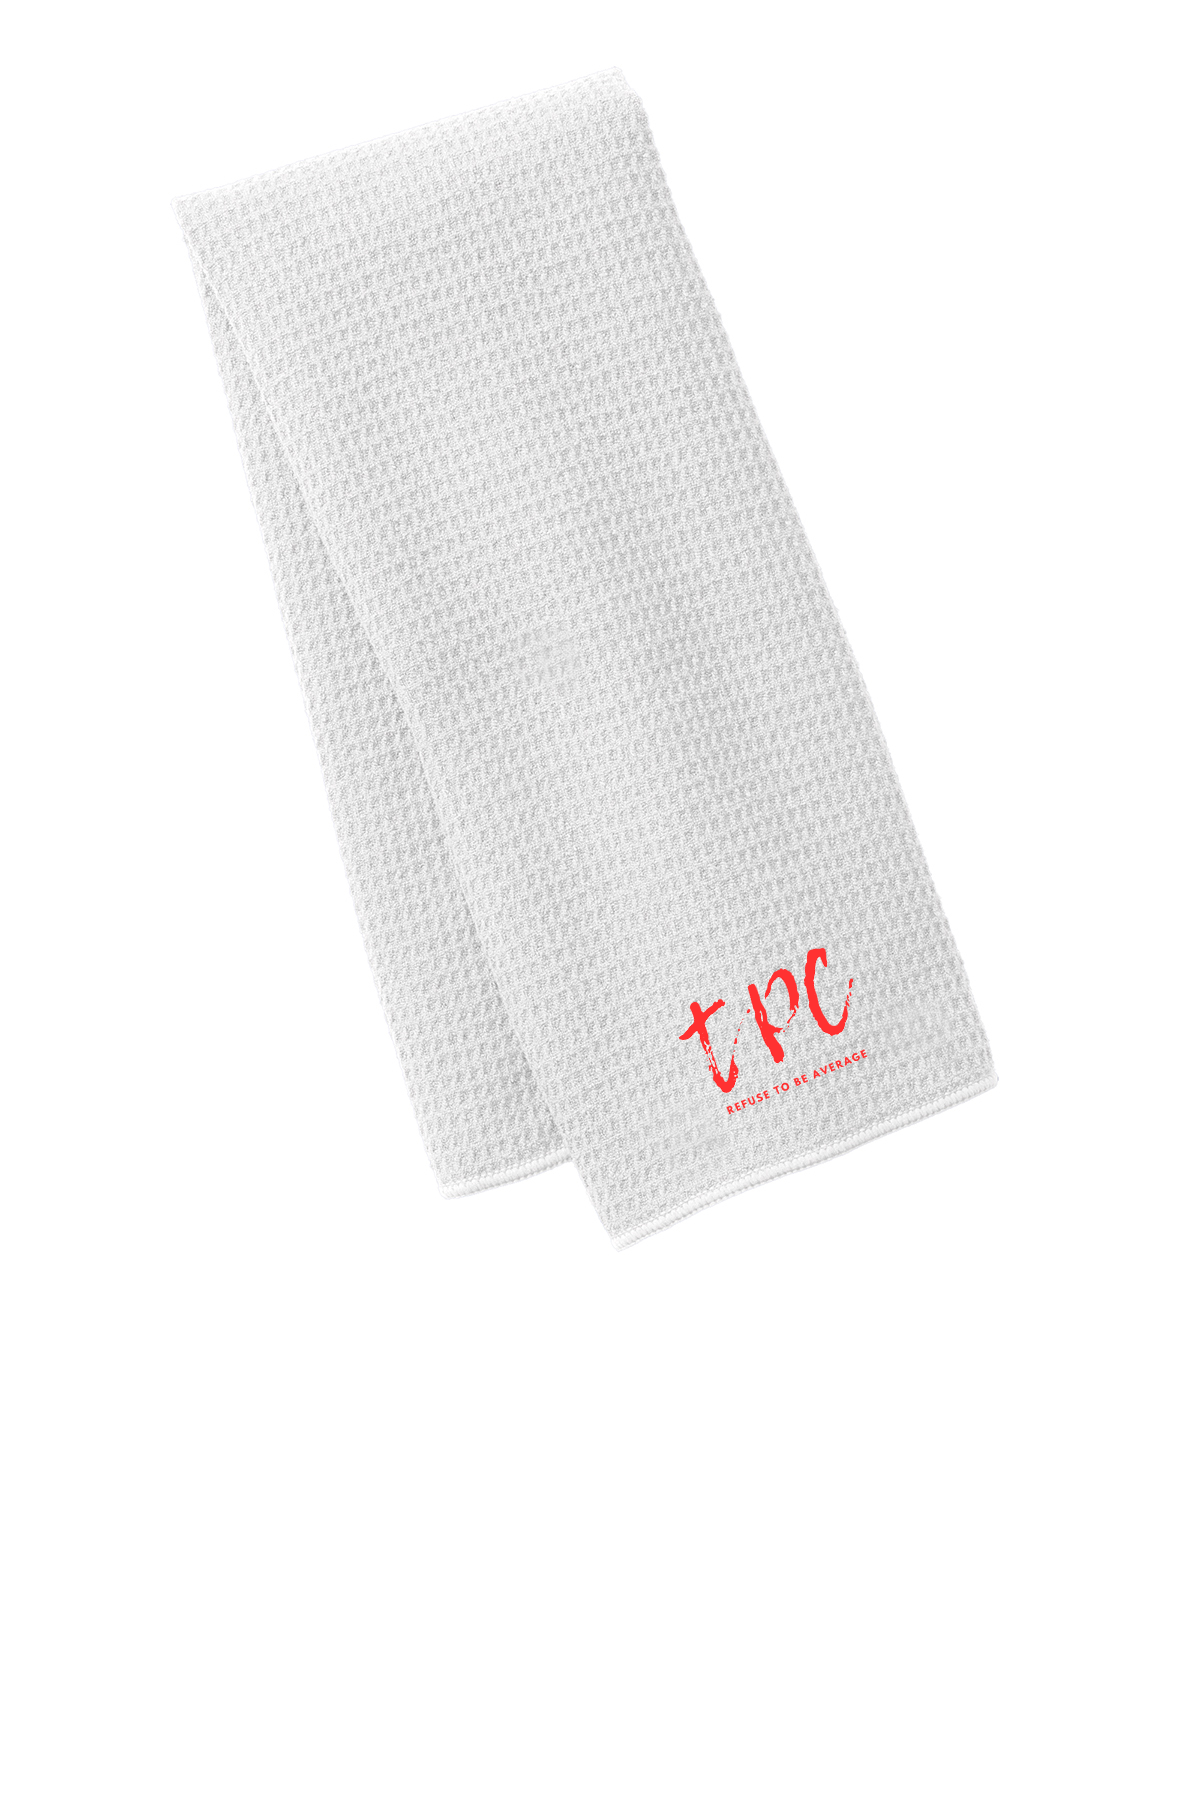 custom design of Port Authority TW59 Waffle Microfiber Fitness Towel